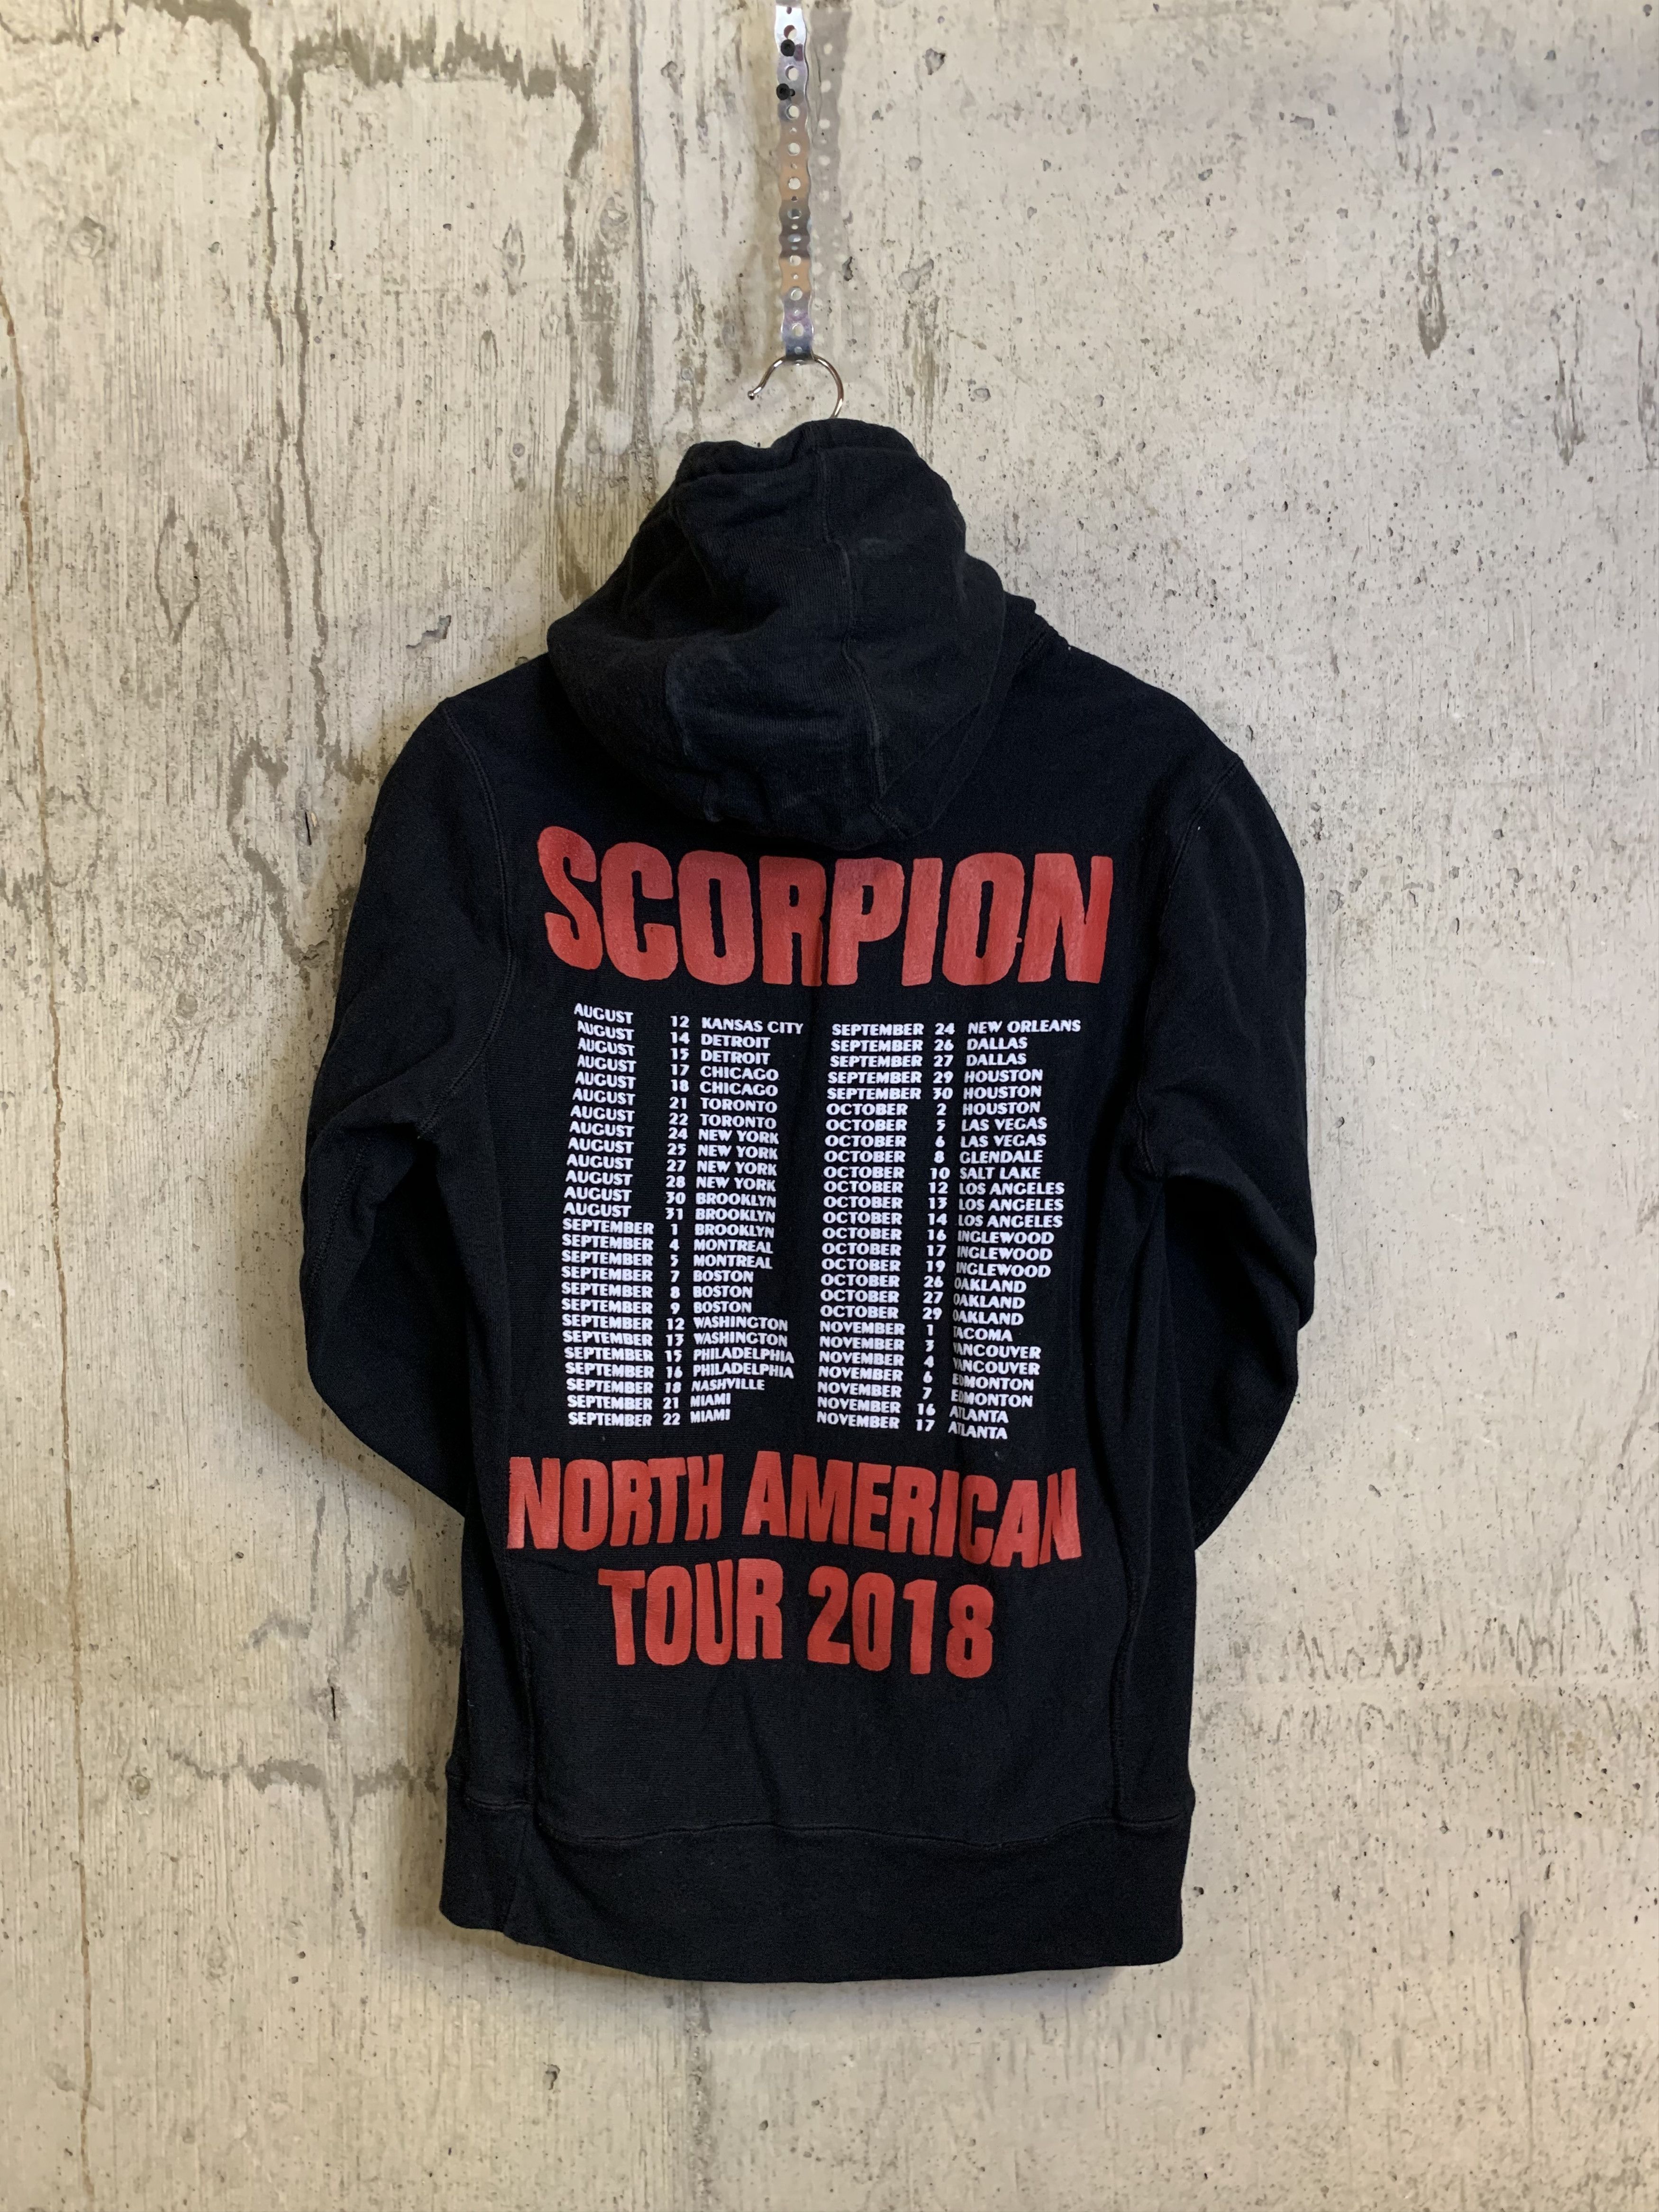 Vintage Drake Scorpion Tour 2018 America Tour Hoodie Size US S / EU 44-46 / 1 - 1 Preview